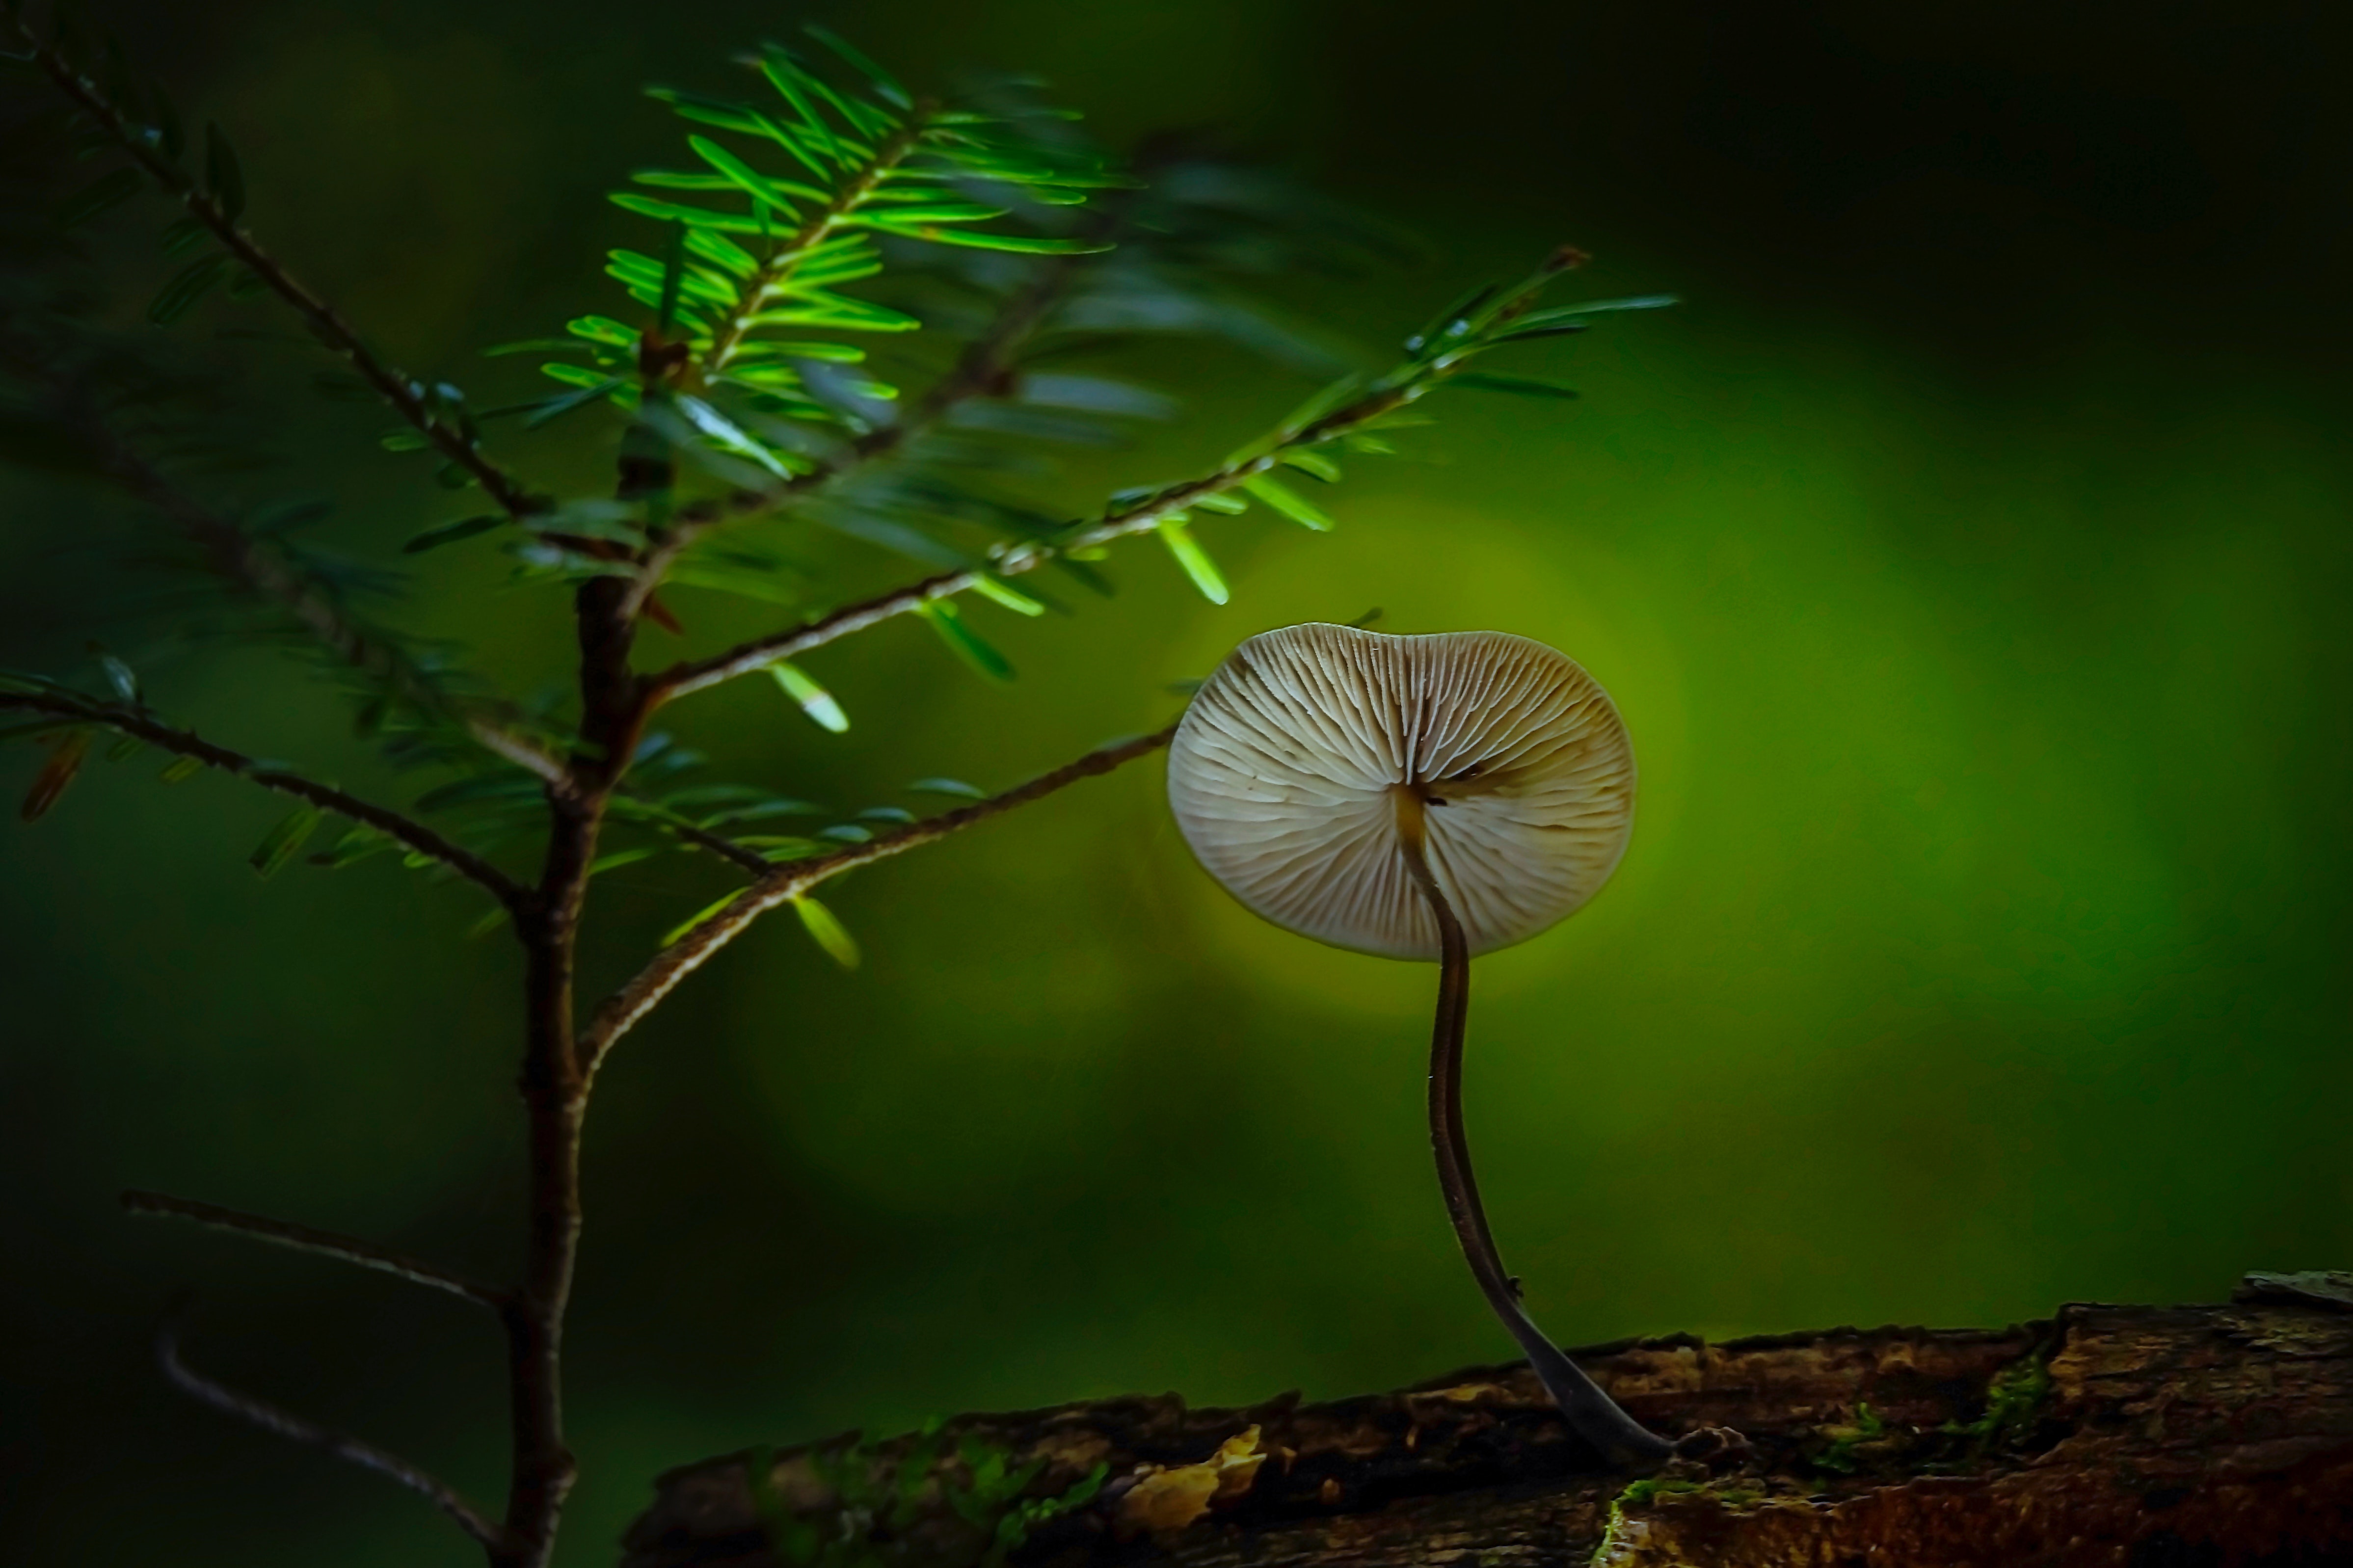 Brown and Gray Mushroom on Brown Sand Near Green Plant, Miniature, Wood, Wild, Tree, HQ Photo